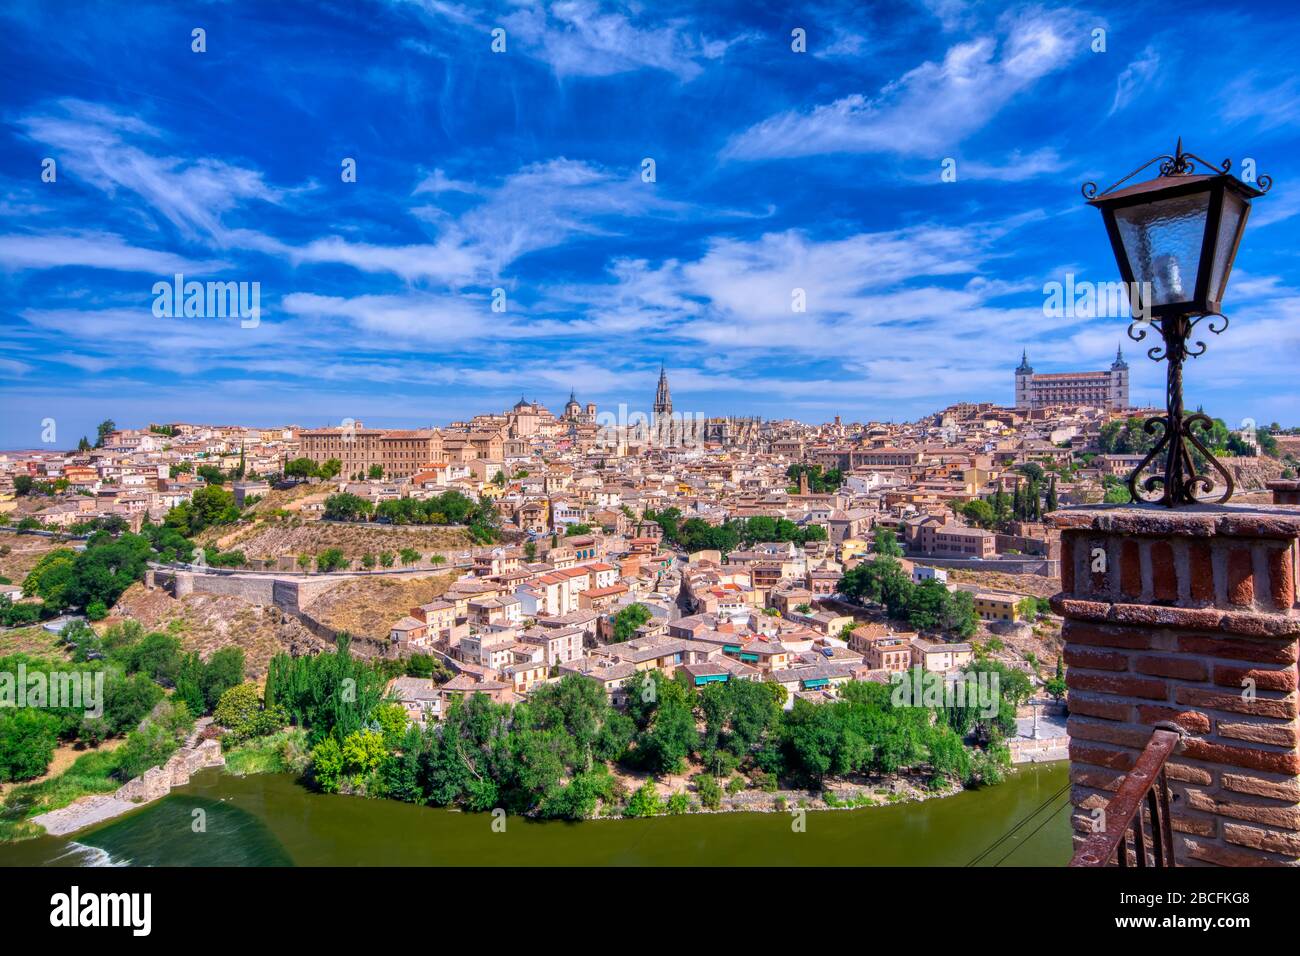 Blick auf die historische Stadt Toledo mit dem Fluss Tejo, Spanien. UNESCO-Weltkulturerbe. Stockfoto